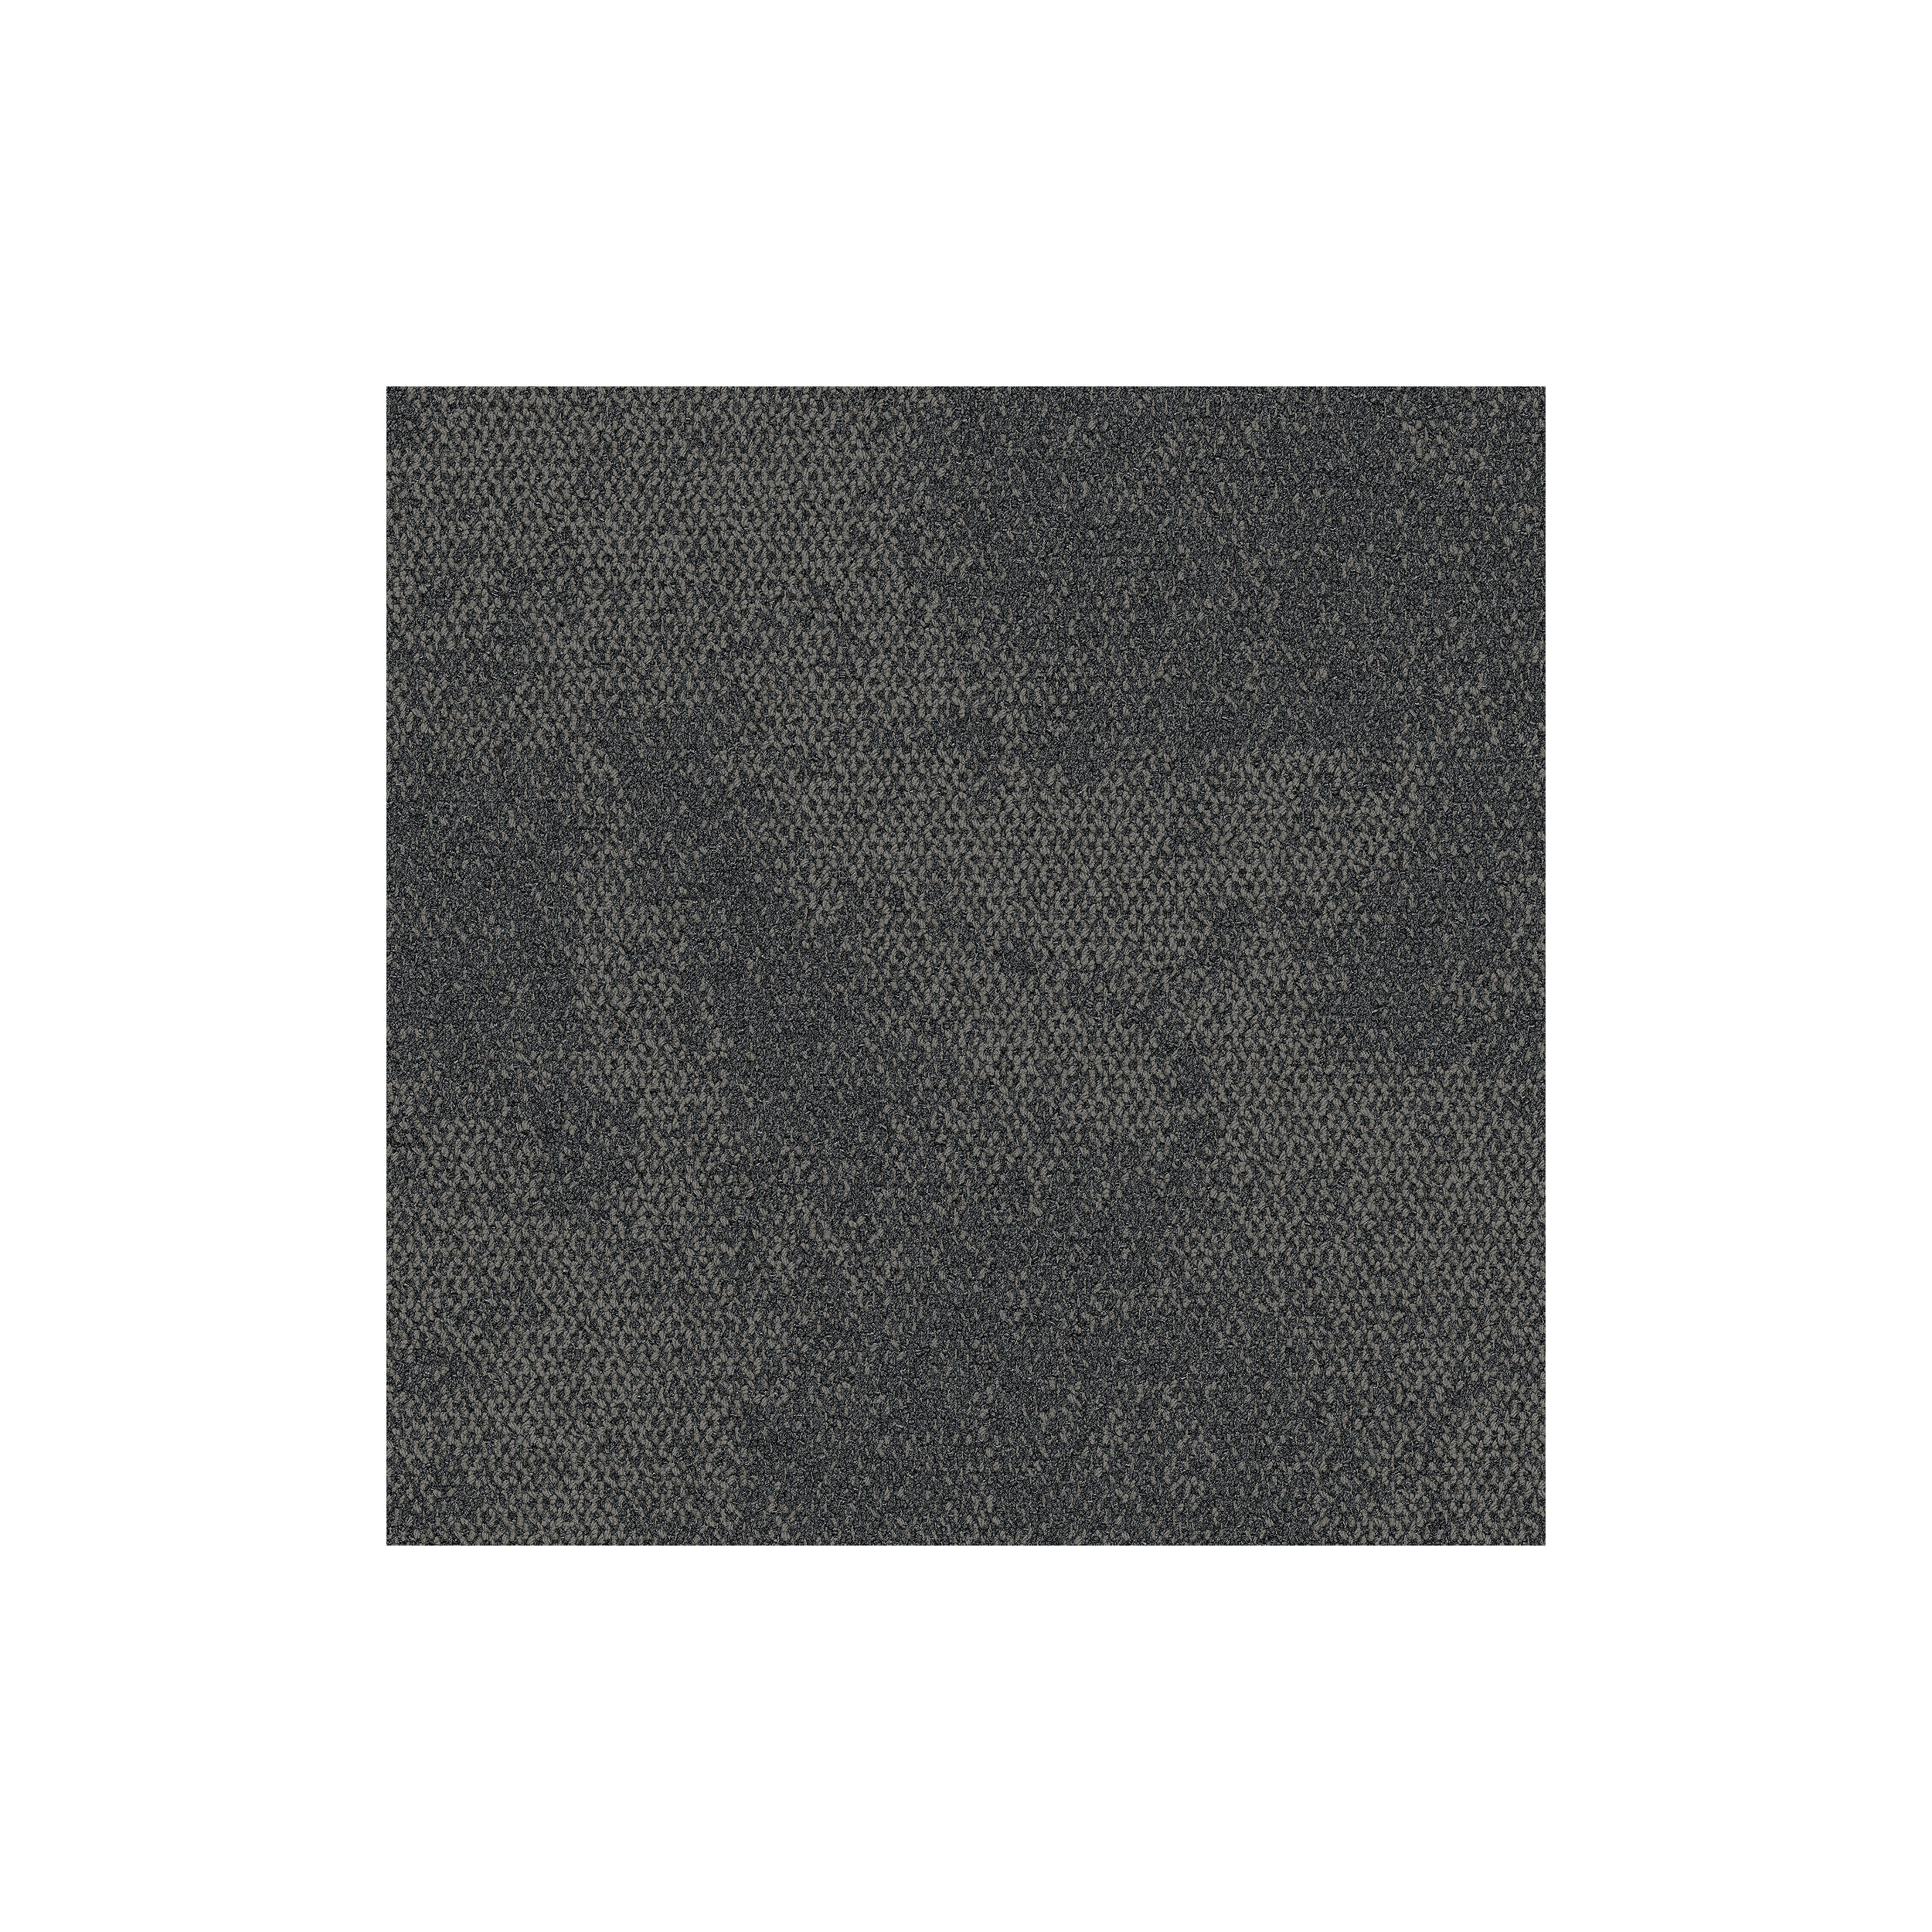 Composure Neutrals Carpet Tile In Fortitude image number 4